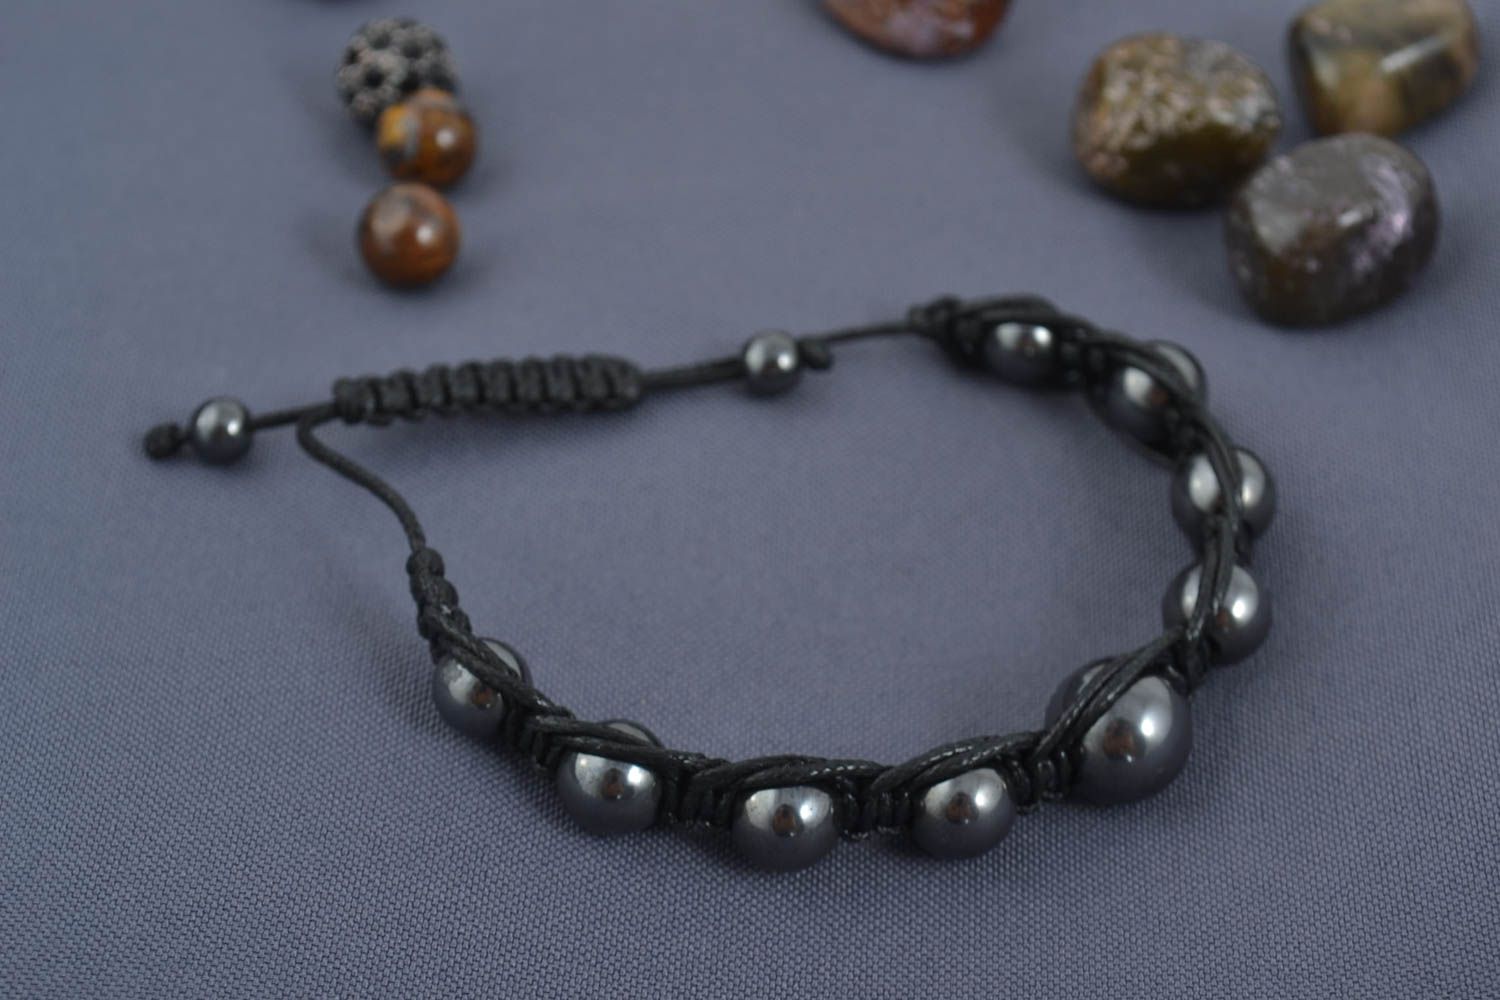 Handmade bracelet gemstone jewelry designer accessories gift ideas for her photo 1